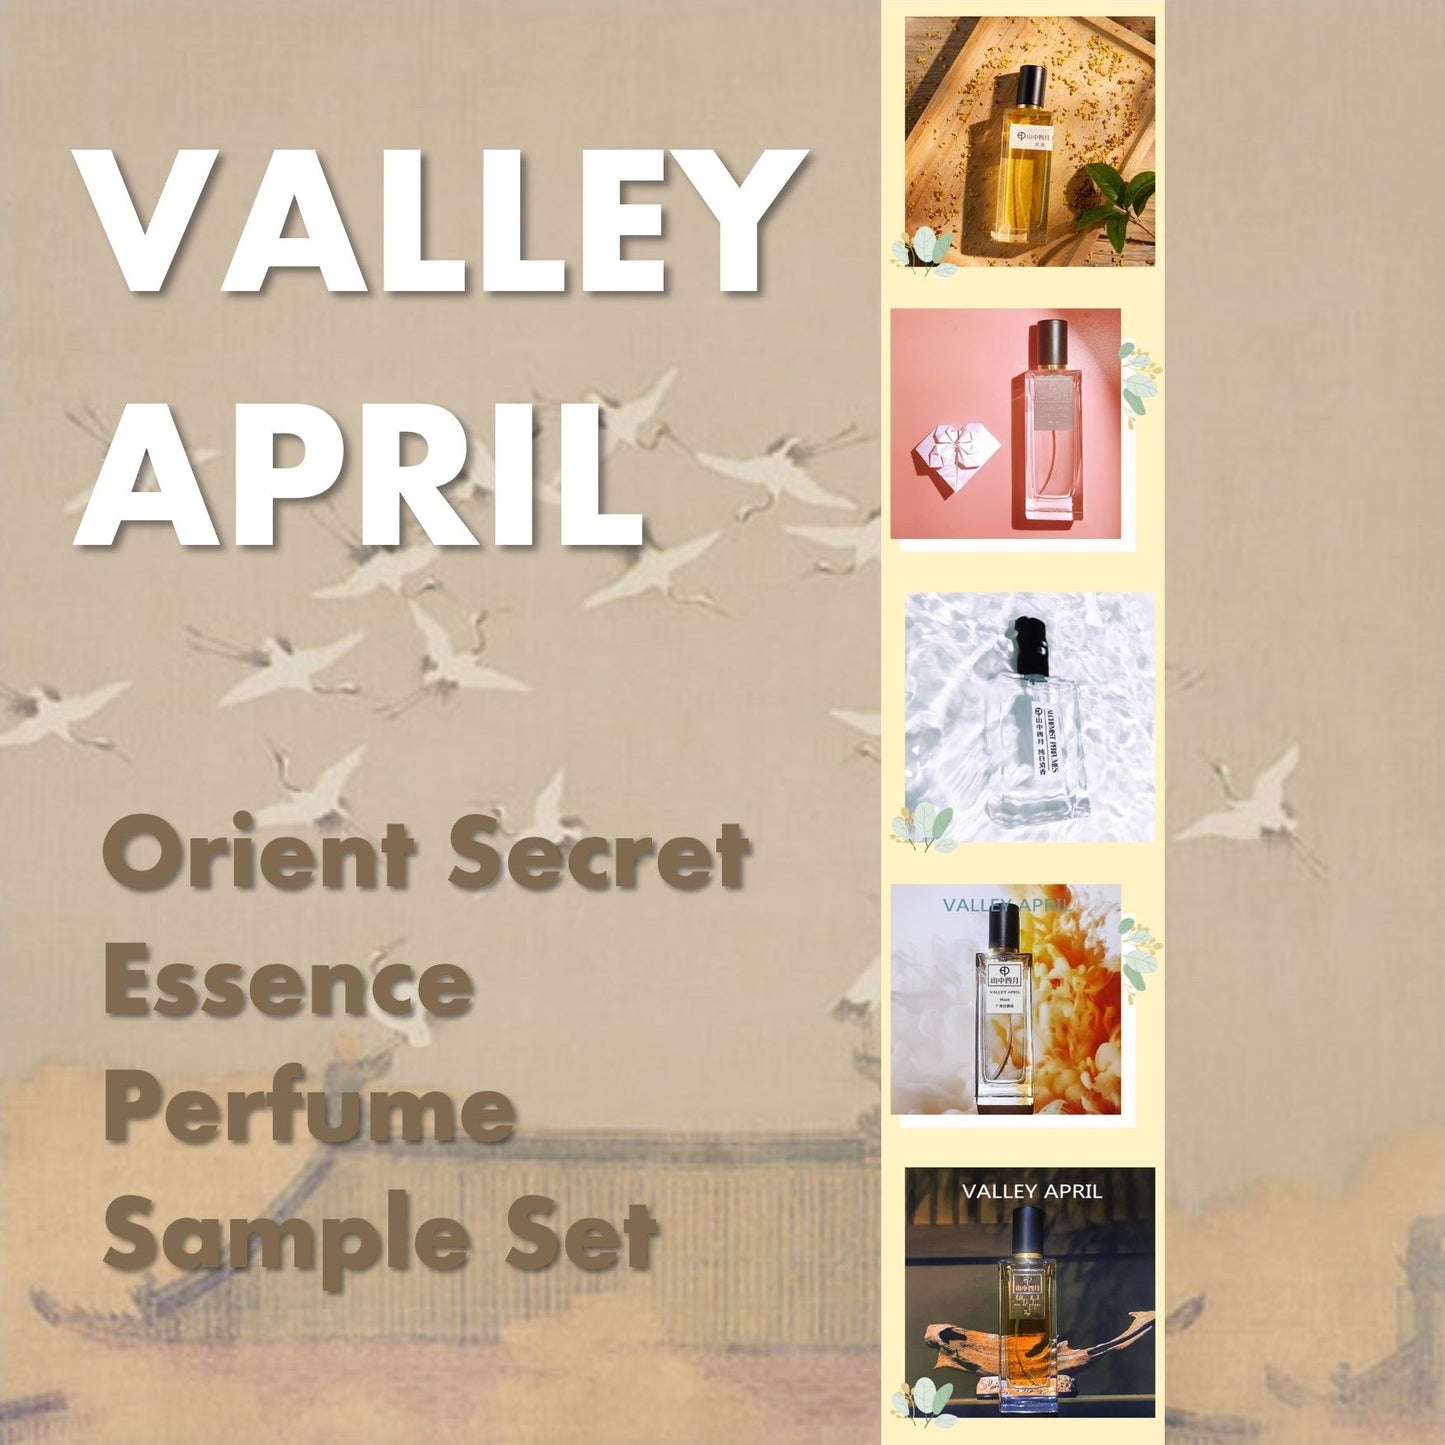 Orient Secret Essence Perfume Sample Set